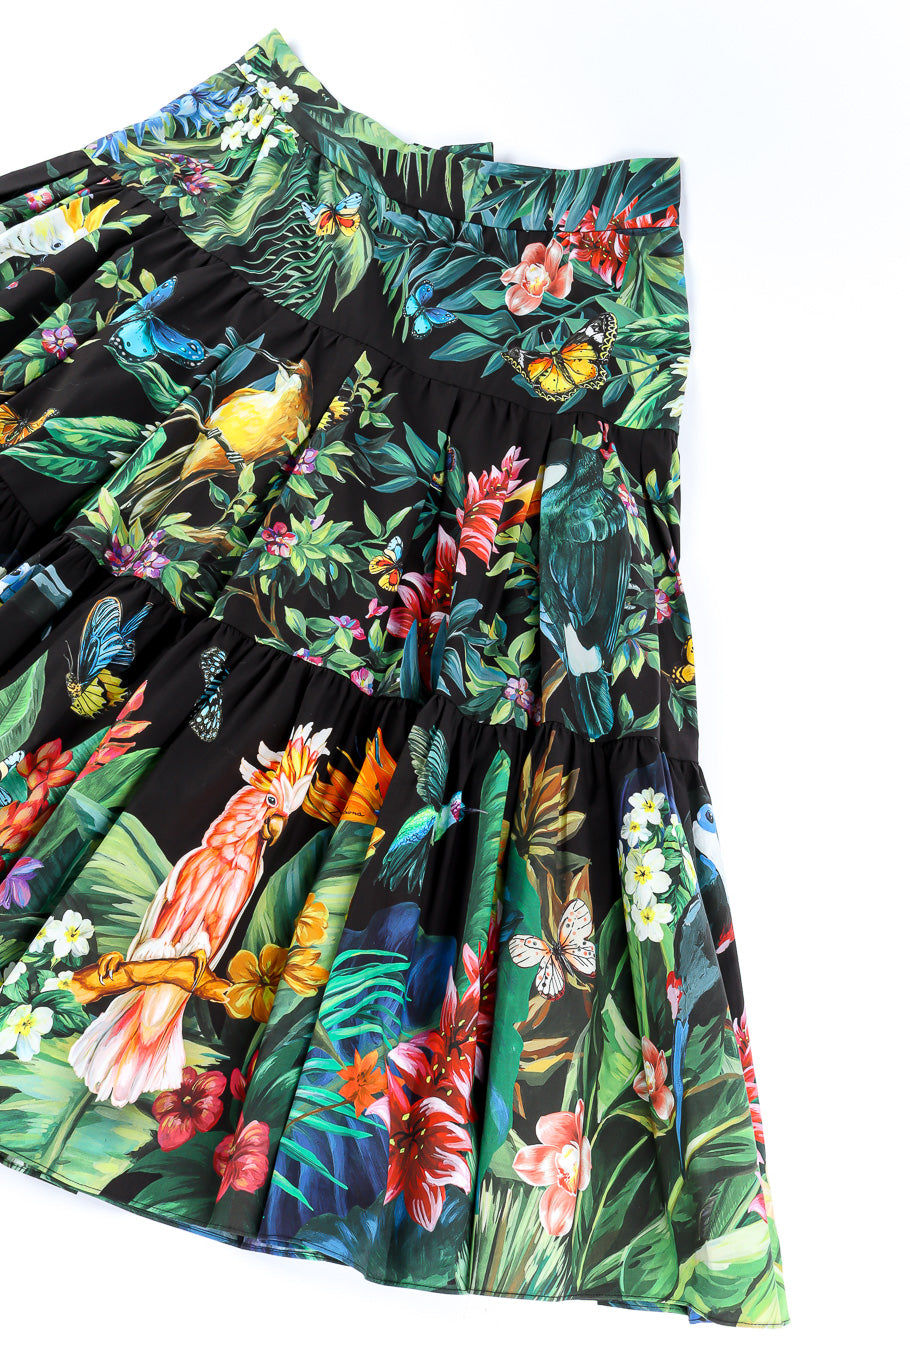 Dolce & Gabbana tiered jungle skirt flat-lay @recessla